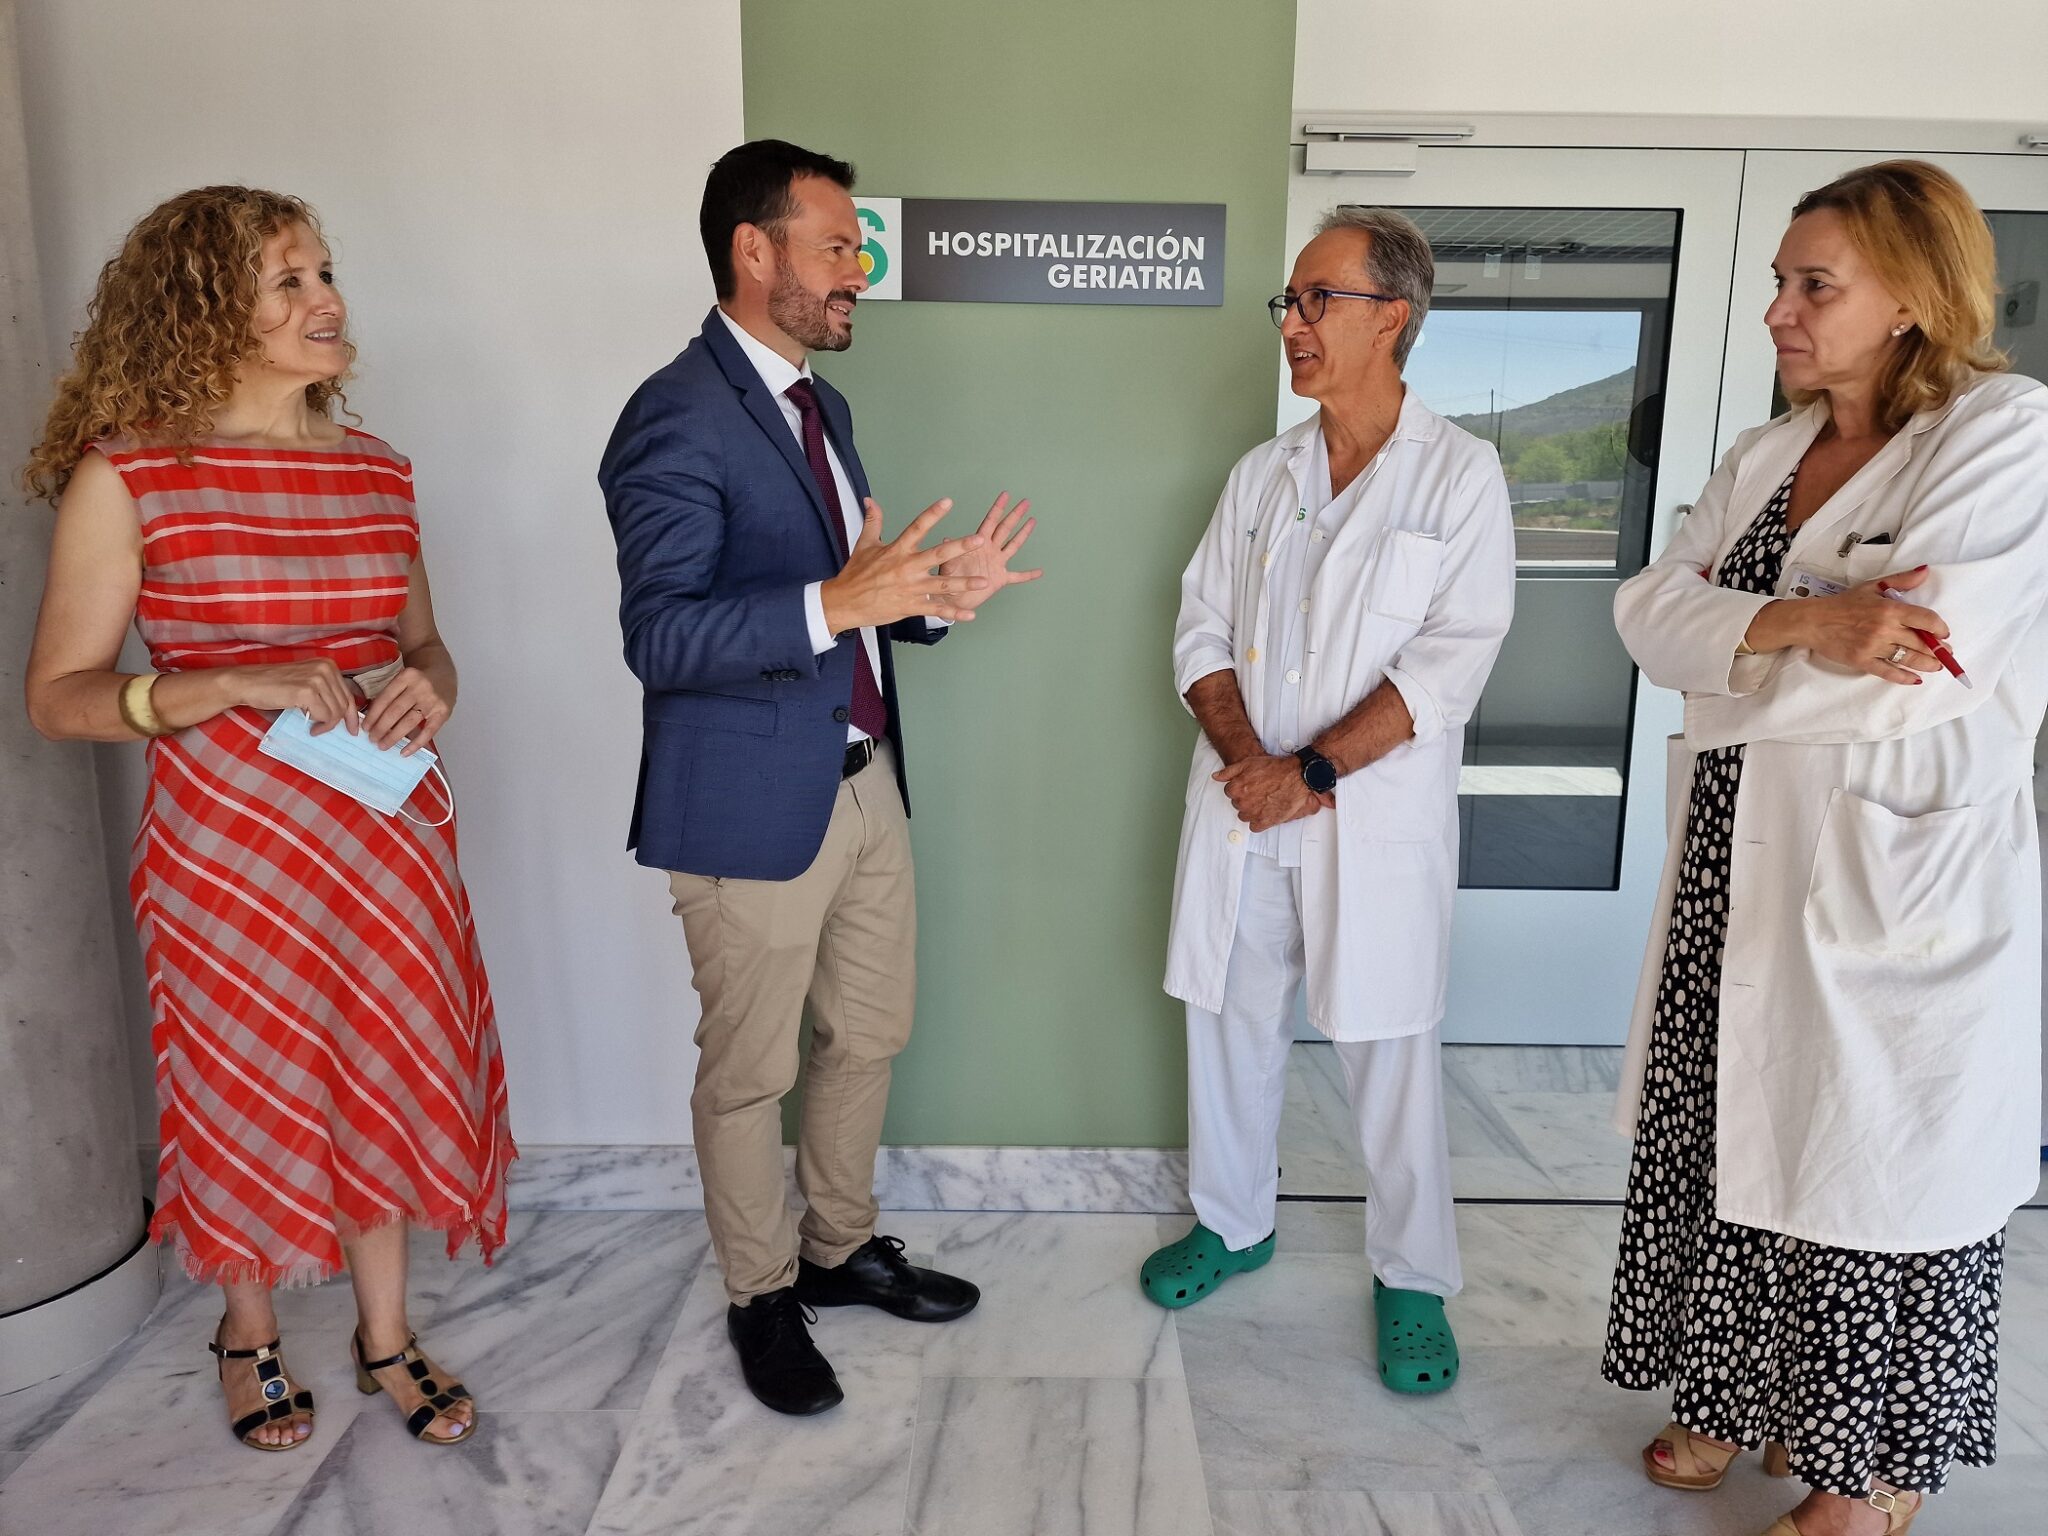 hospitalizacion geriatria | Liberal de Castilla